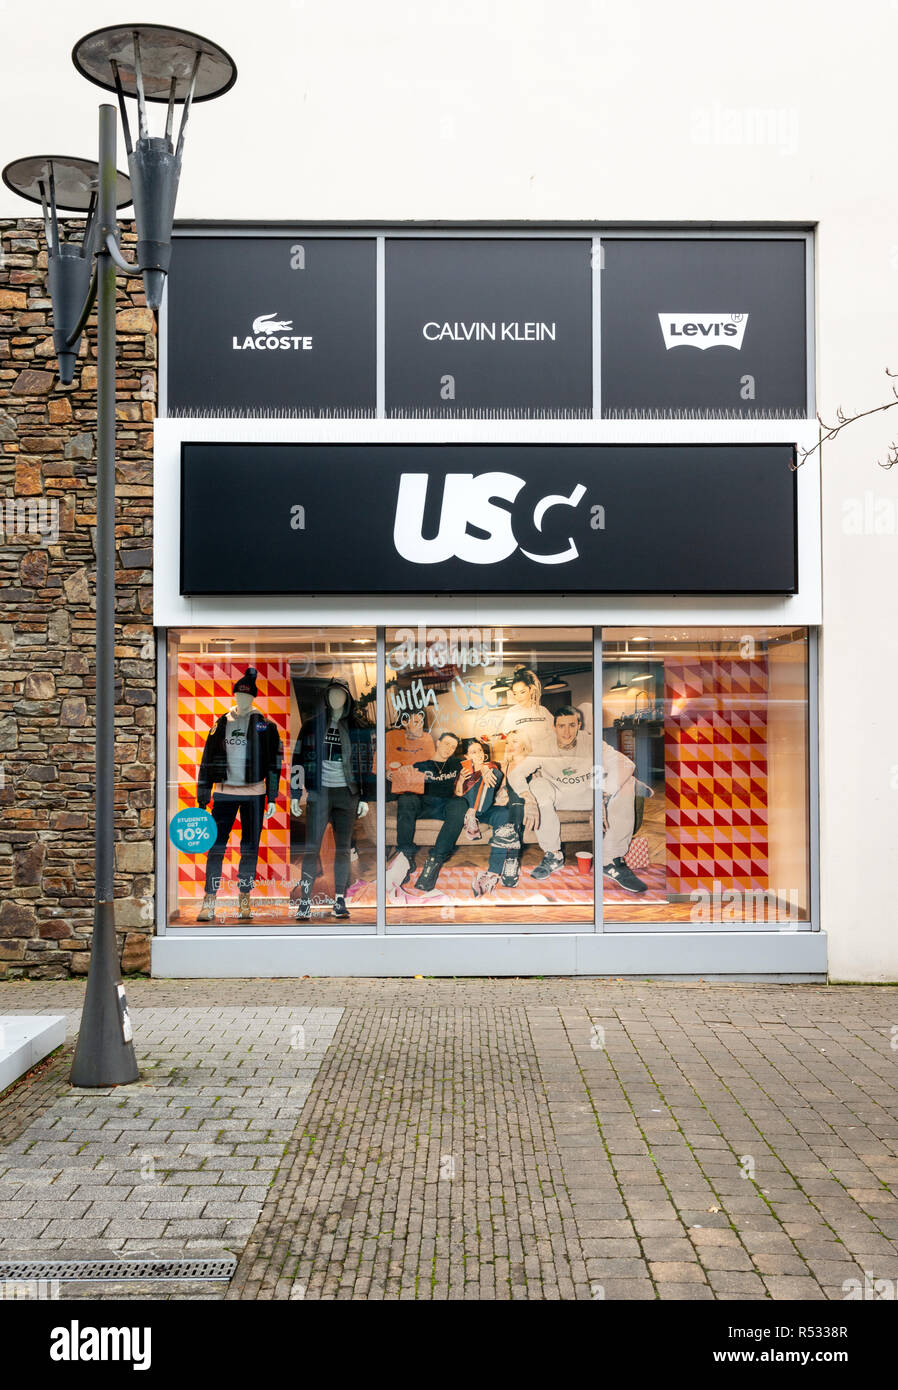 USC shop front on Scotts Street in Killarney, County Kerry, Ireland Stock Photo